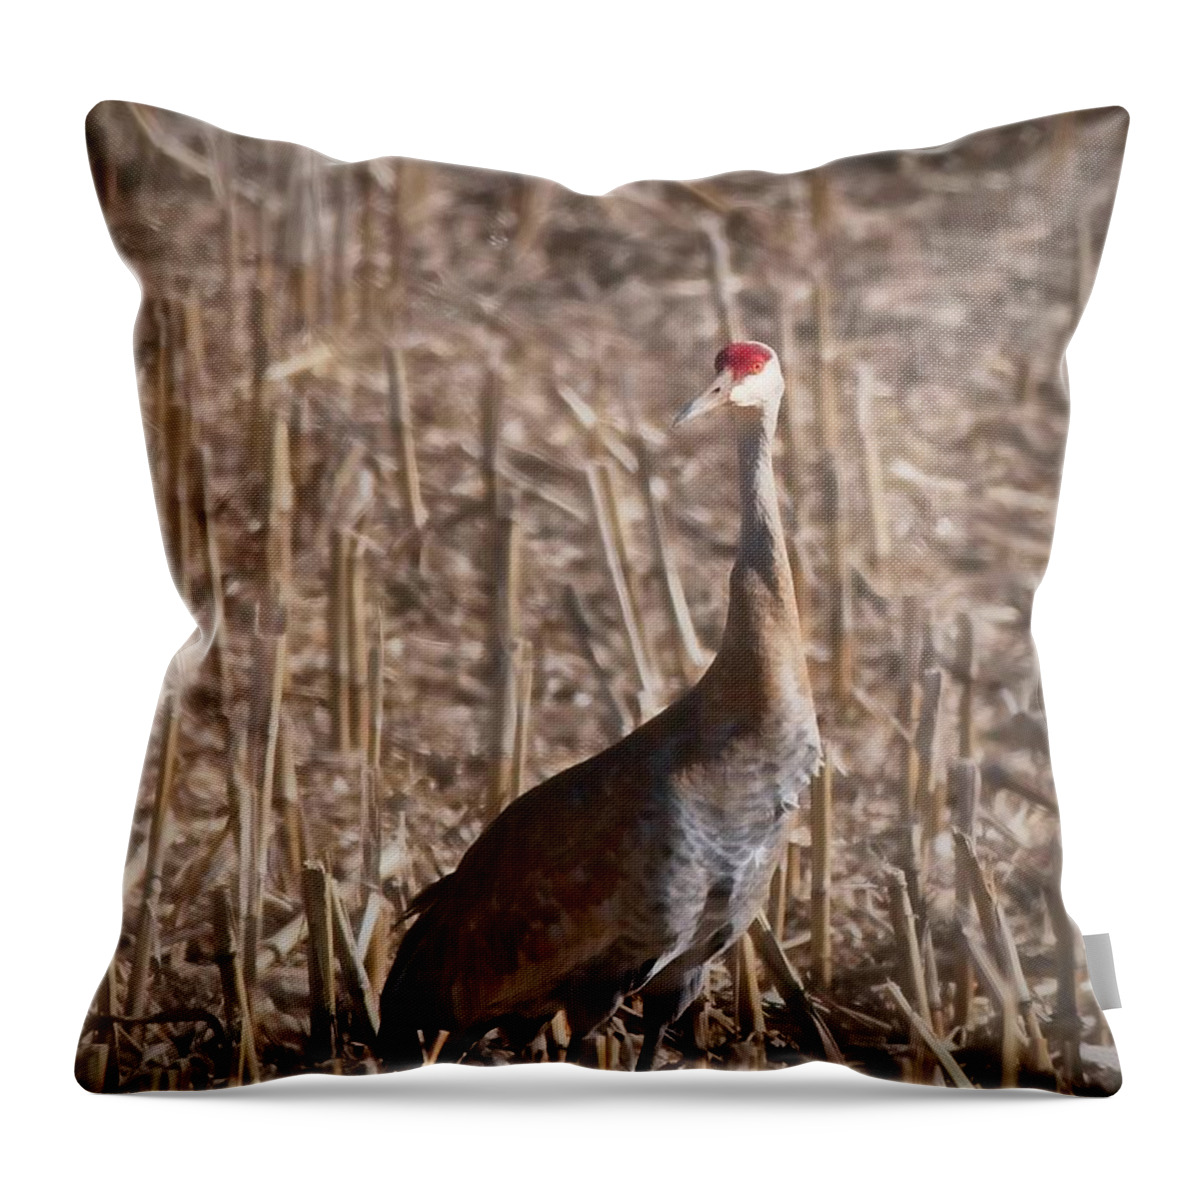 Bird Throw Pillow featuring the photograph Sandhill Crane, Madison, Wisconsin by Steven Ralser